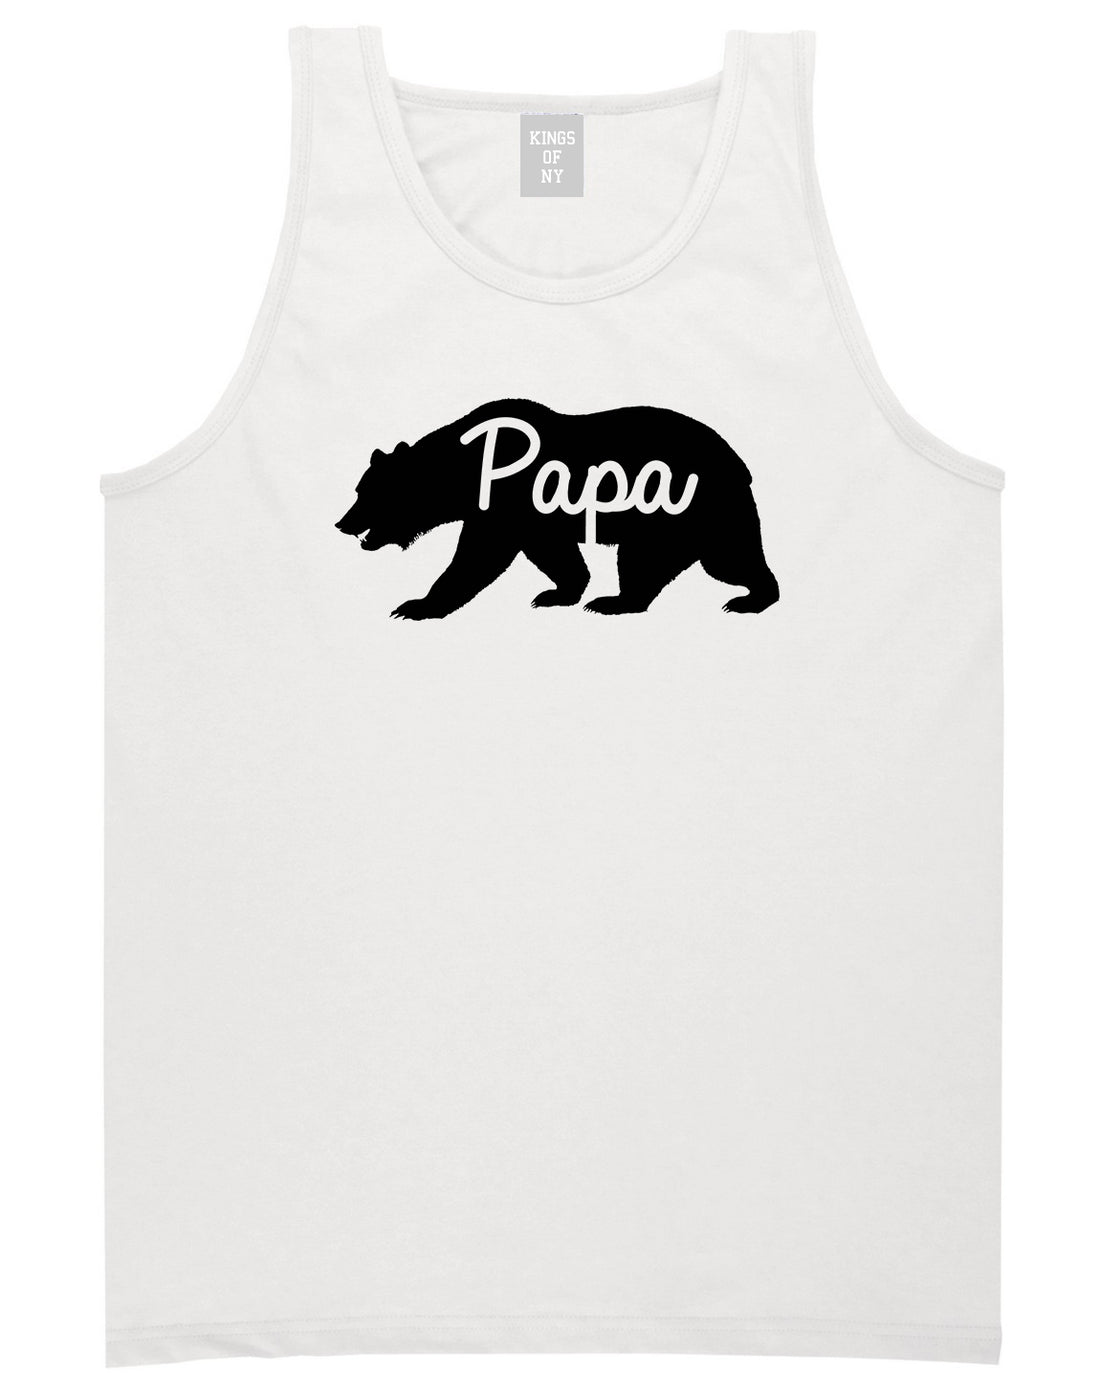 Papa Bear Mens Tank Top Shirt White by Kings Of NY